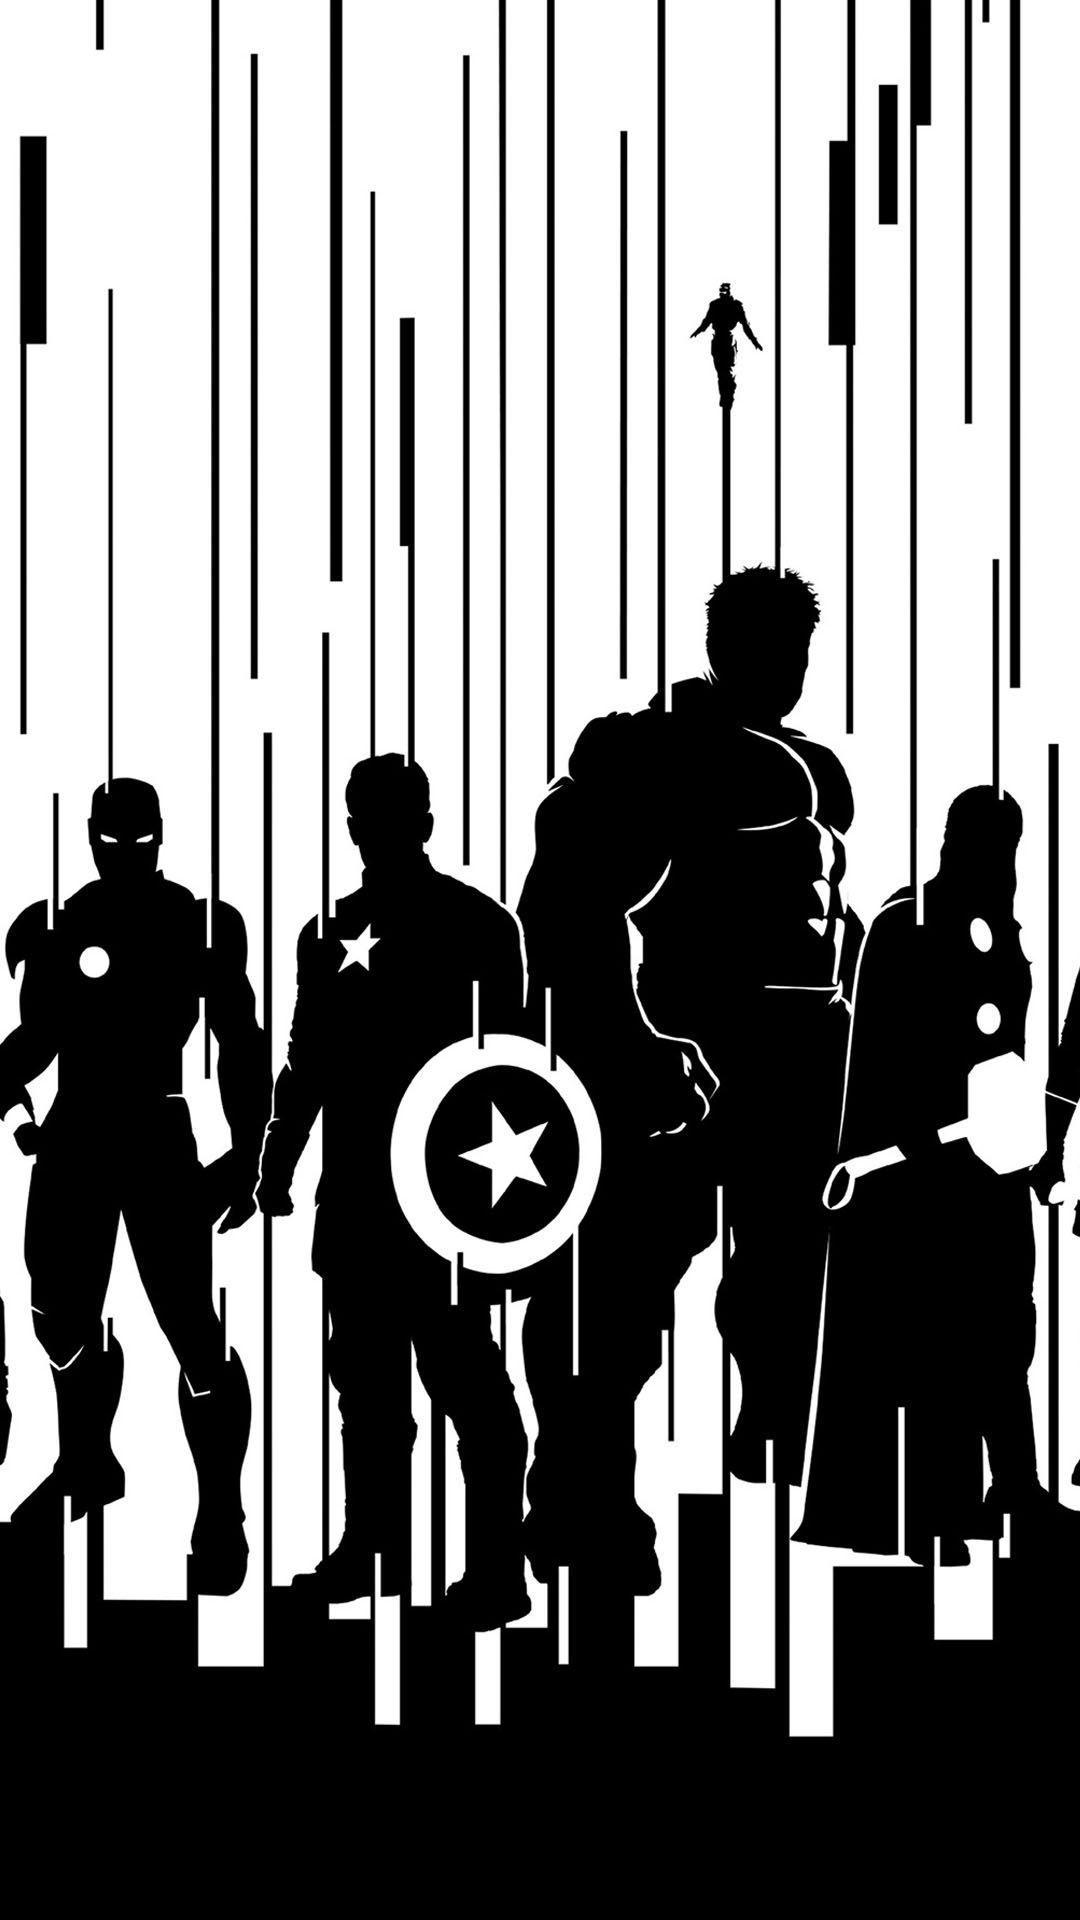 marvel superhero logos black and white